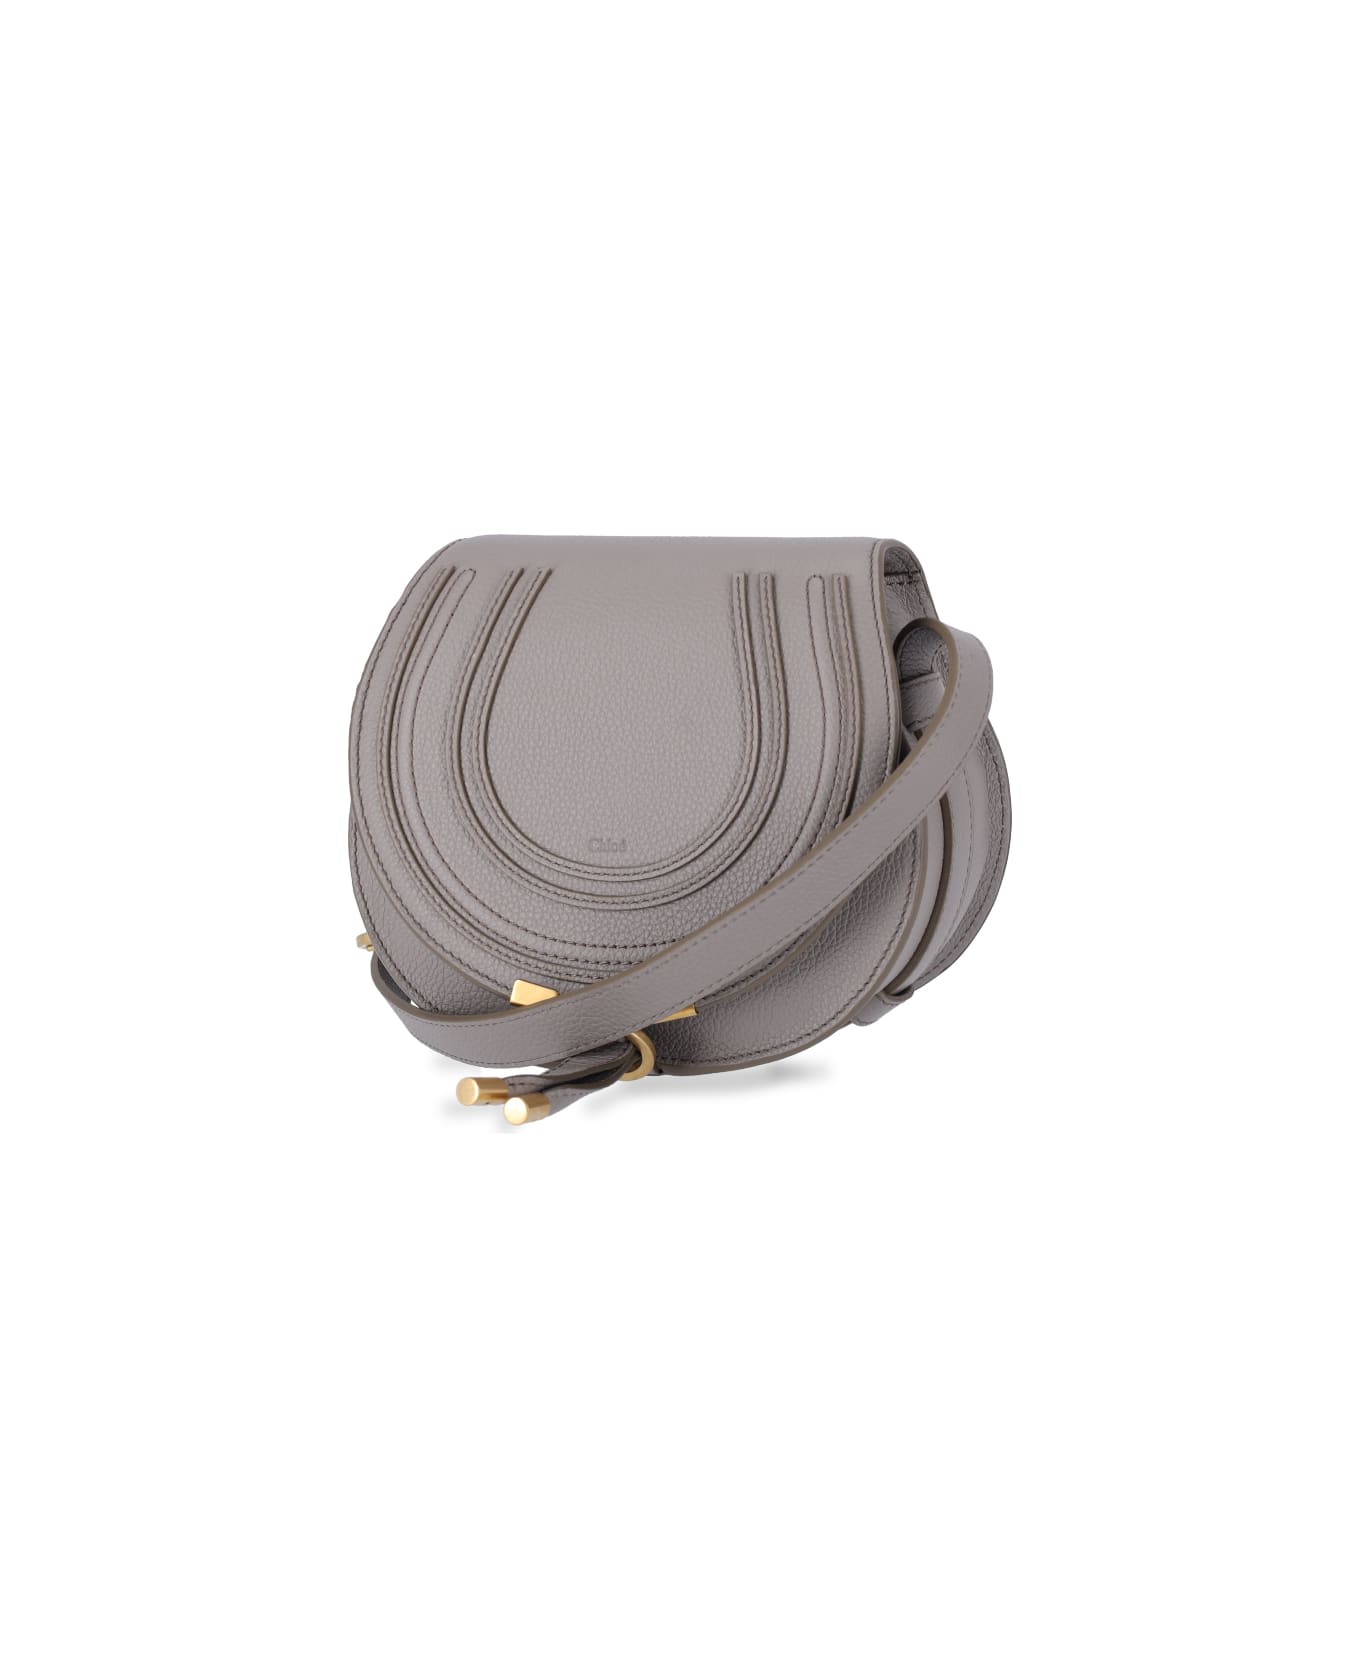 Chloé Small Shoulder Bag 'marcie' - Cashmere grey